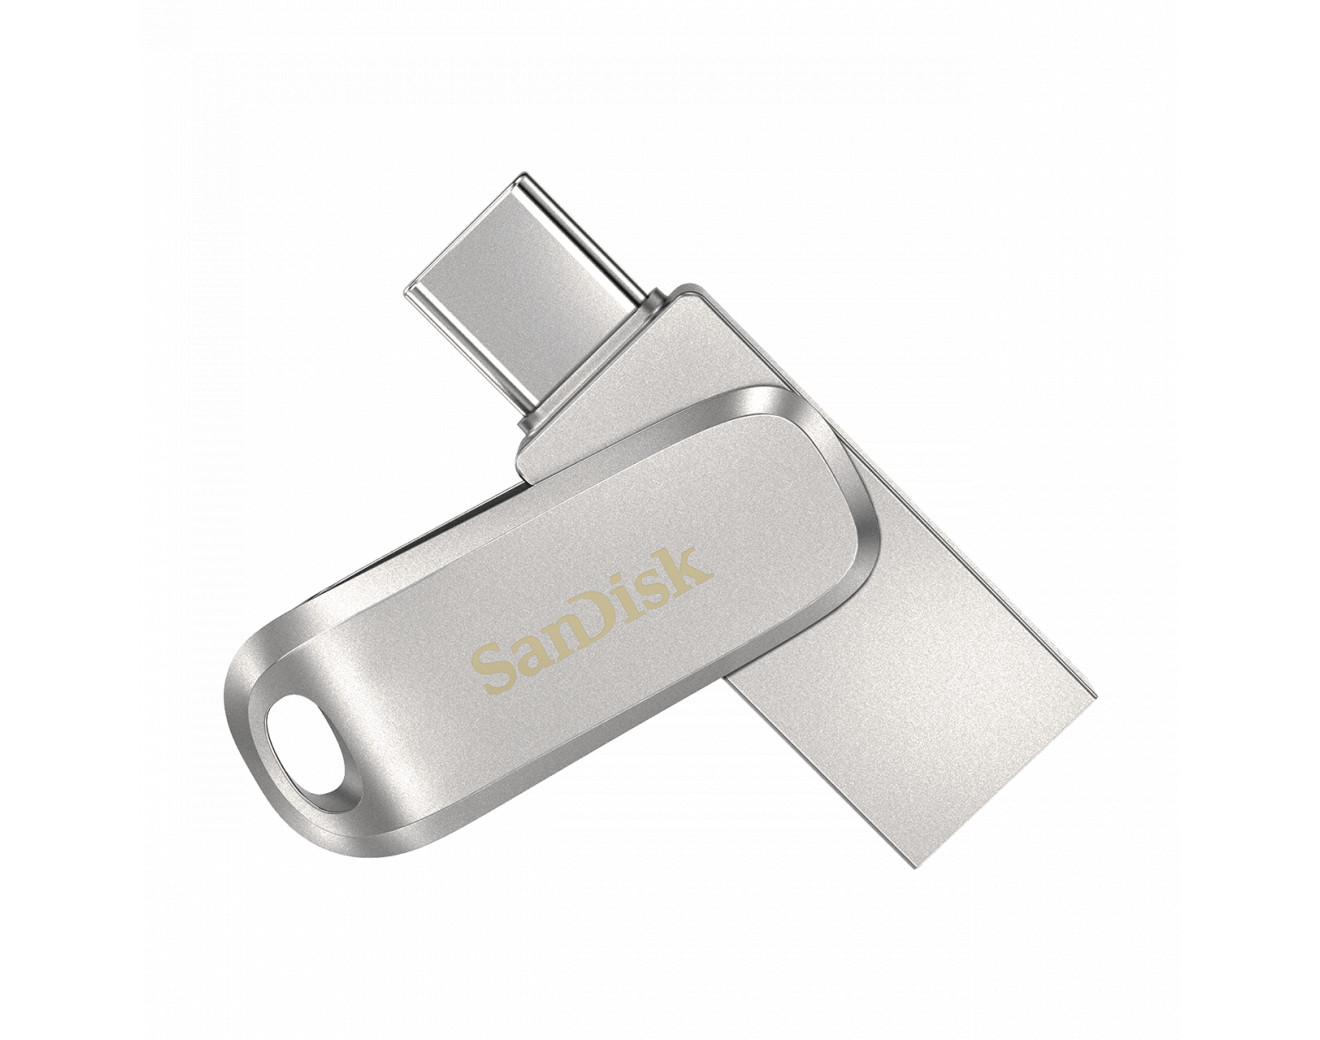 Външна памет SanDisk Ultra Dual Drive Luxe USB 3.1 32GB - Silver